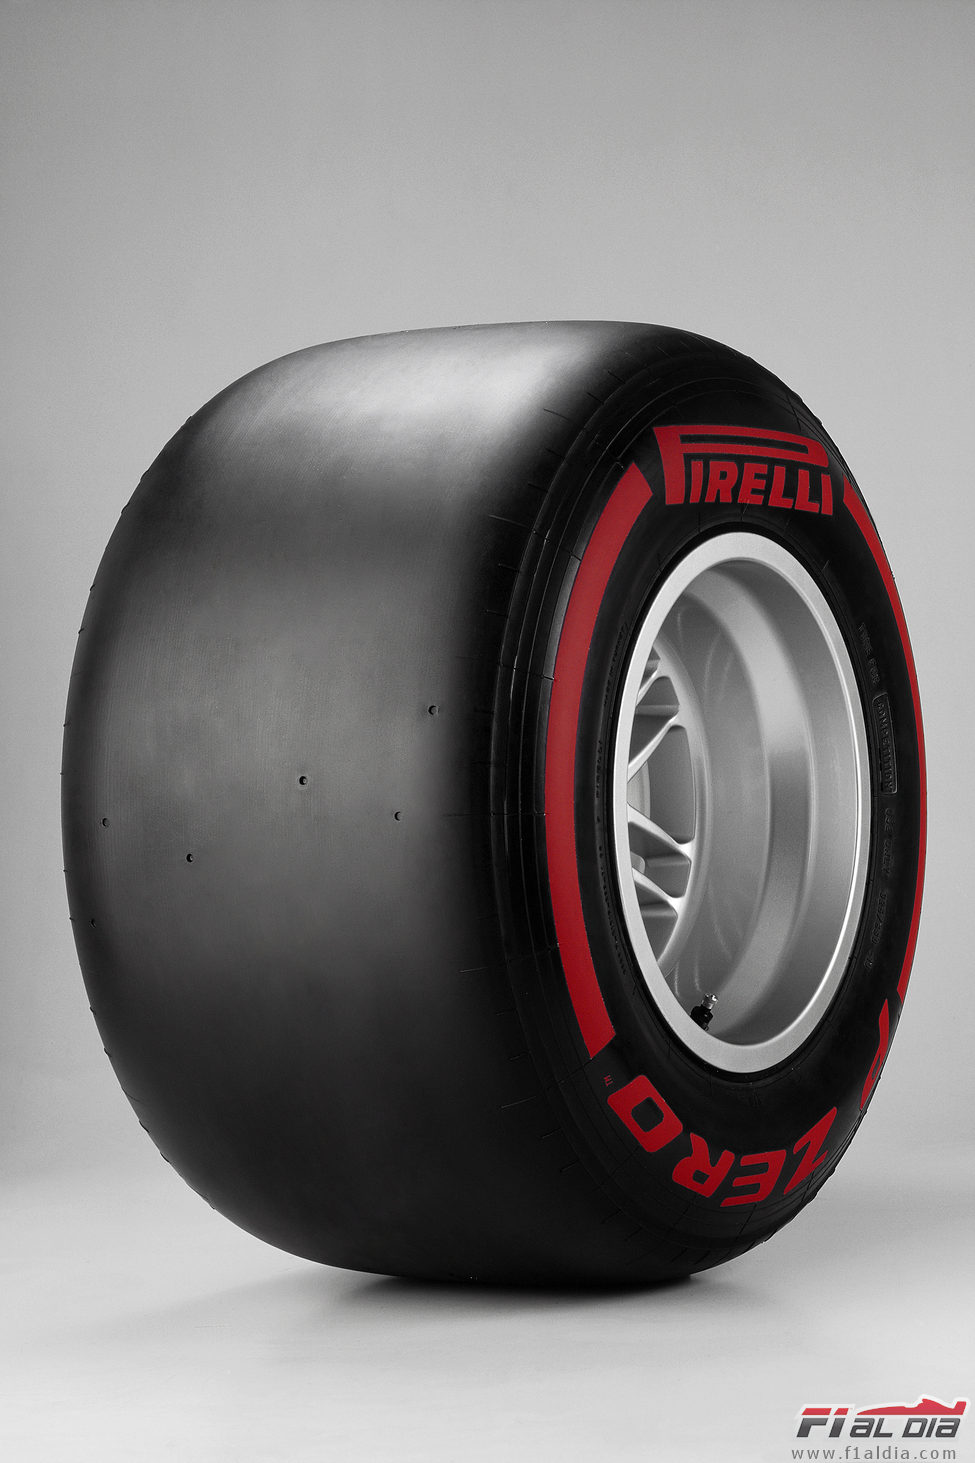 Pirelli 2012: superblando (lateral)